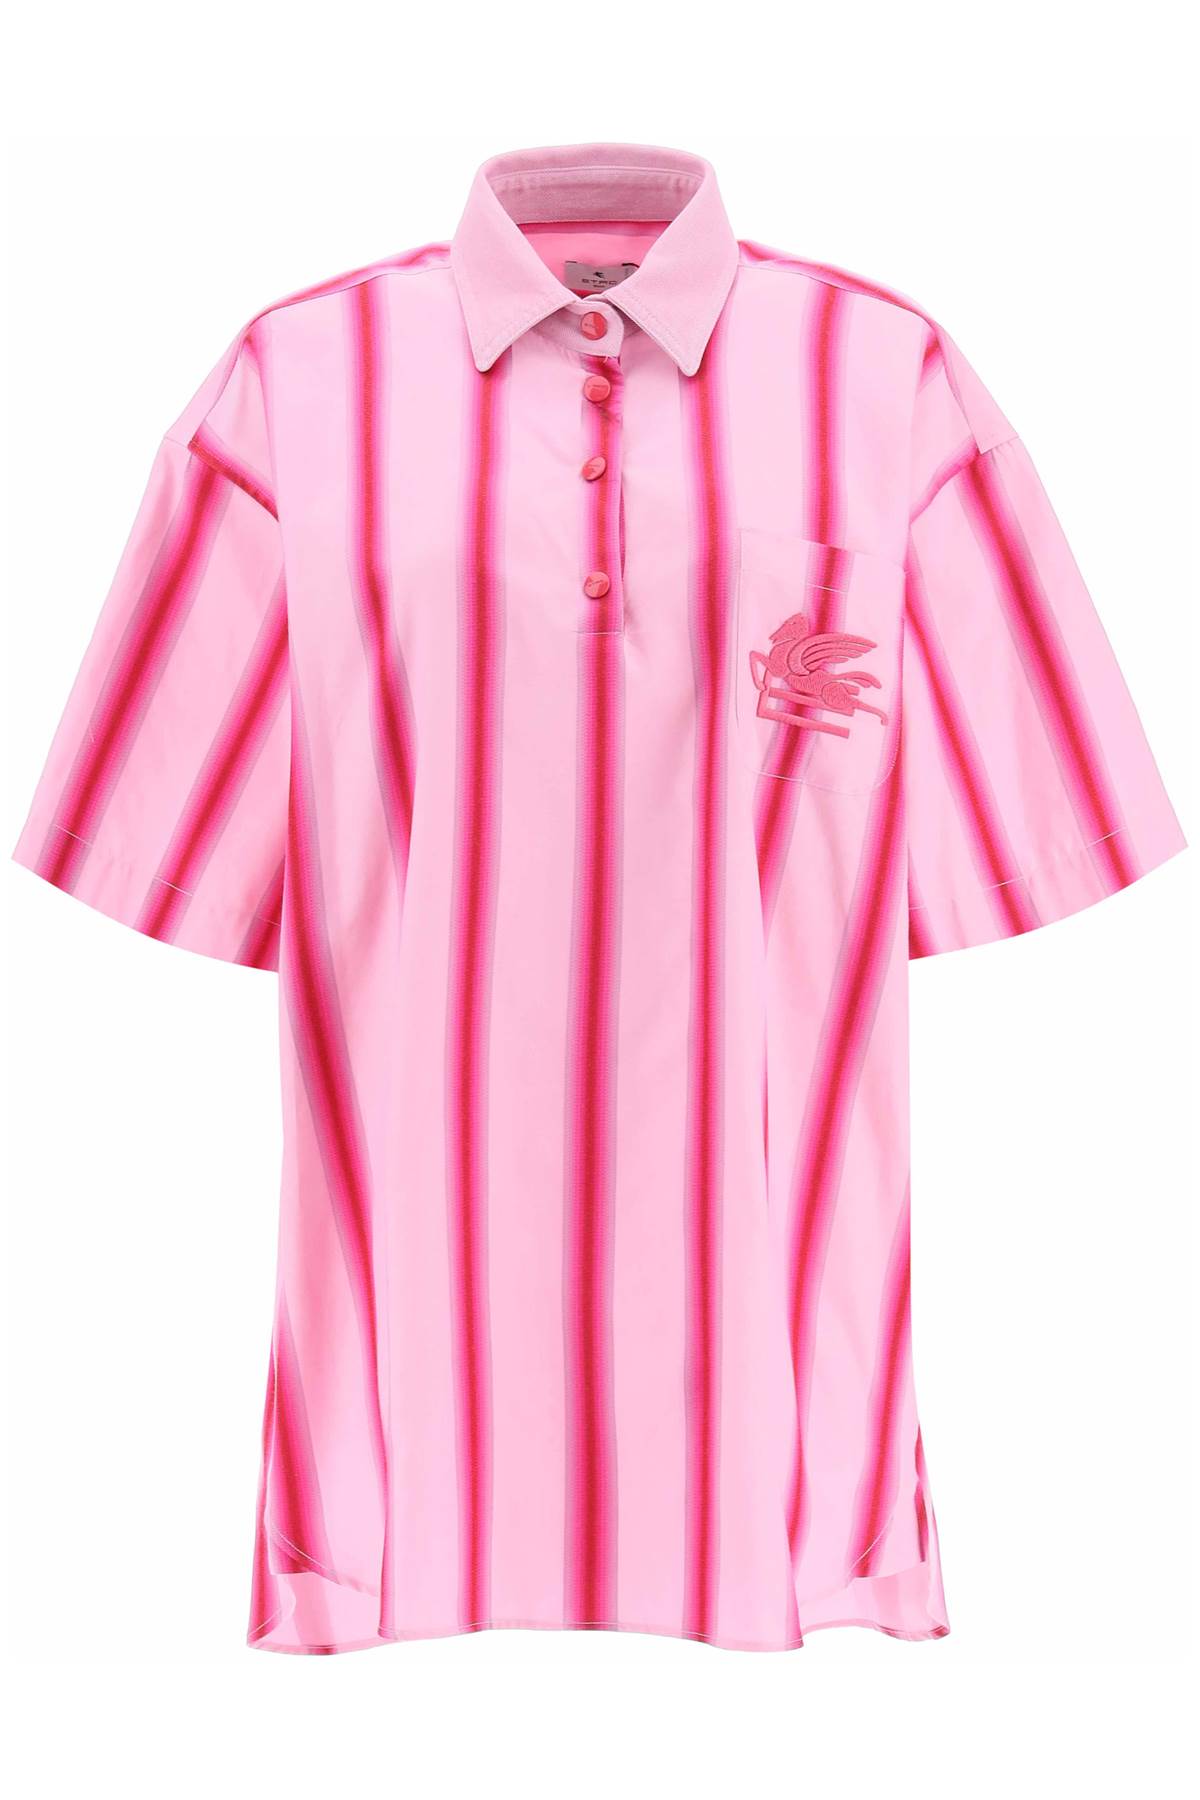 Etro striped mini shirt dress 12614 1665 PINK